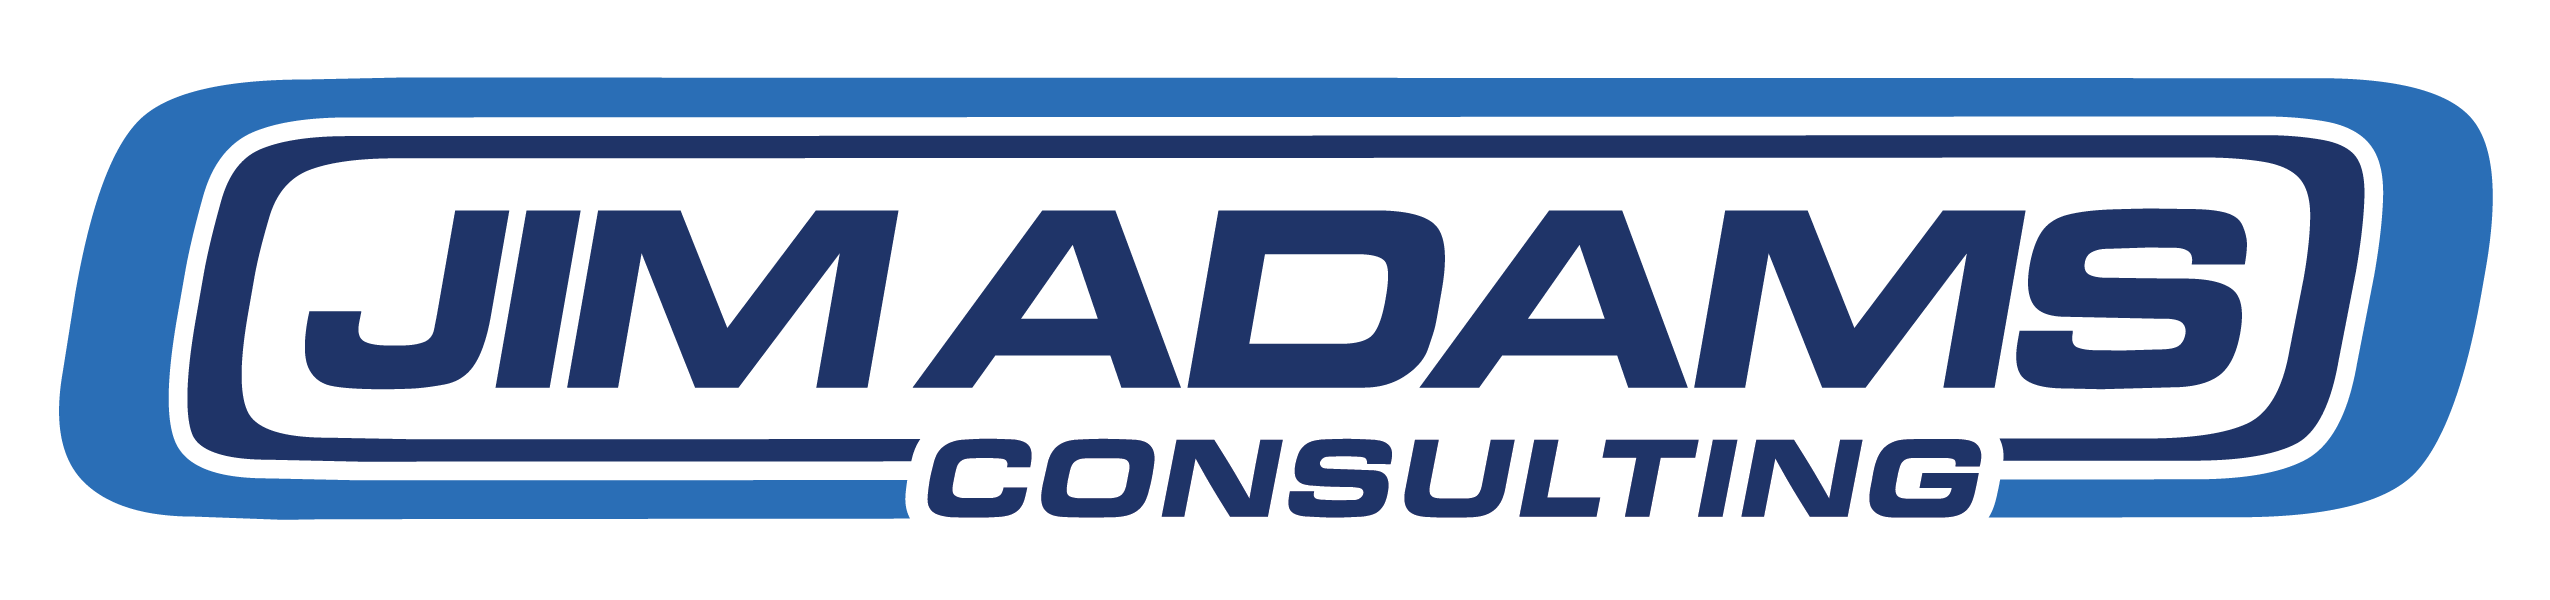 Jim Adams Consulting - logo